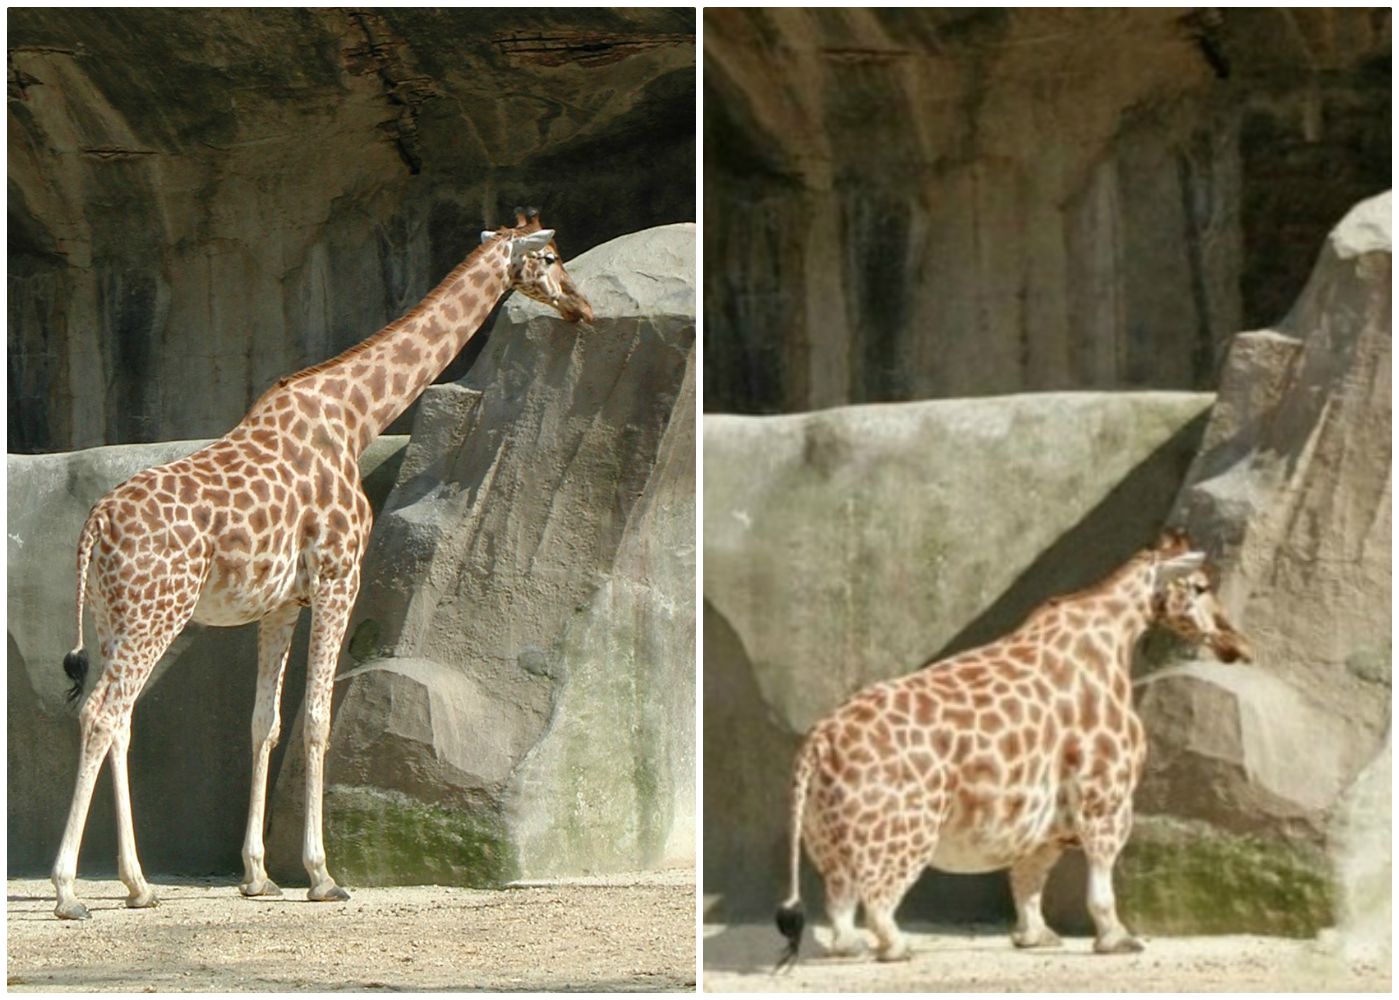 Midget and giraffe